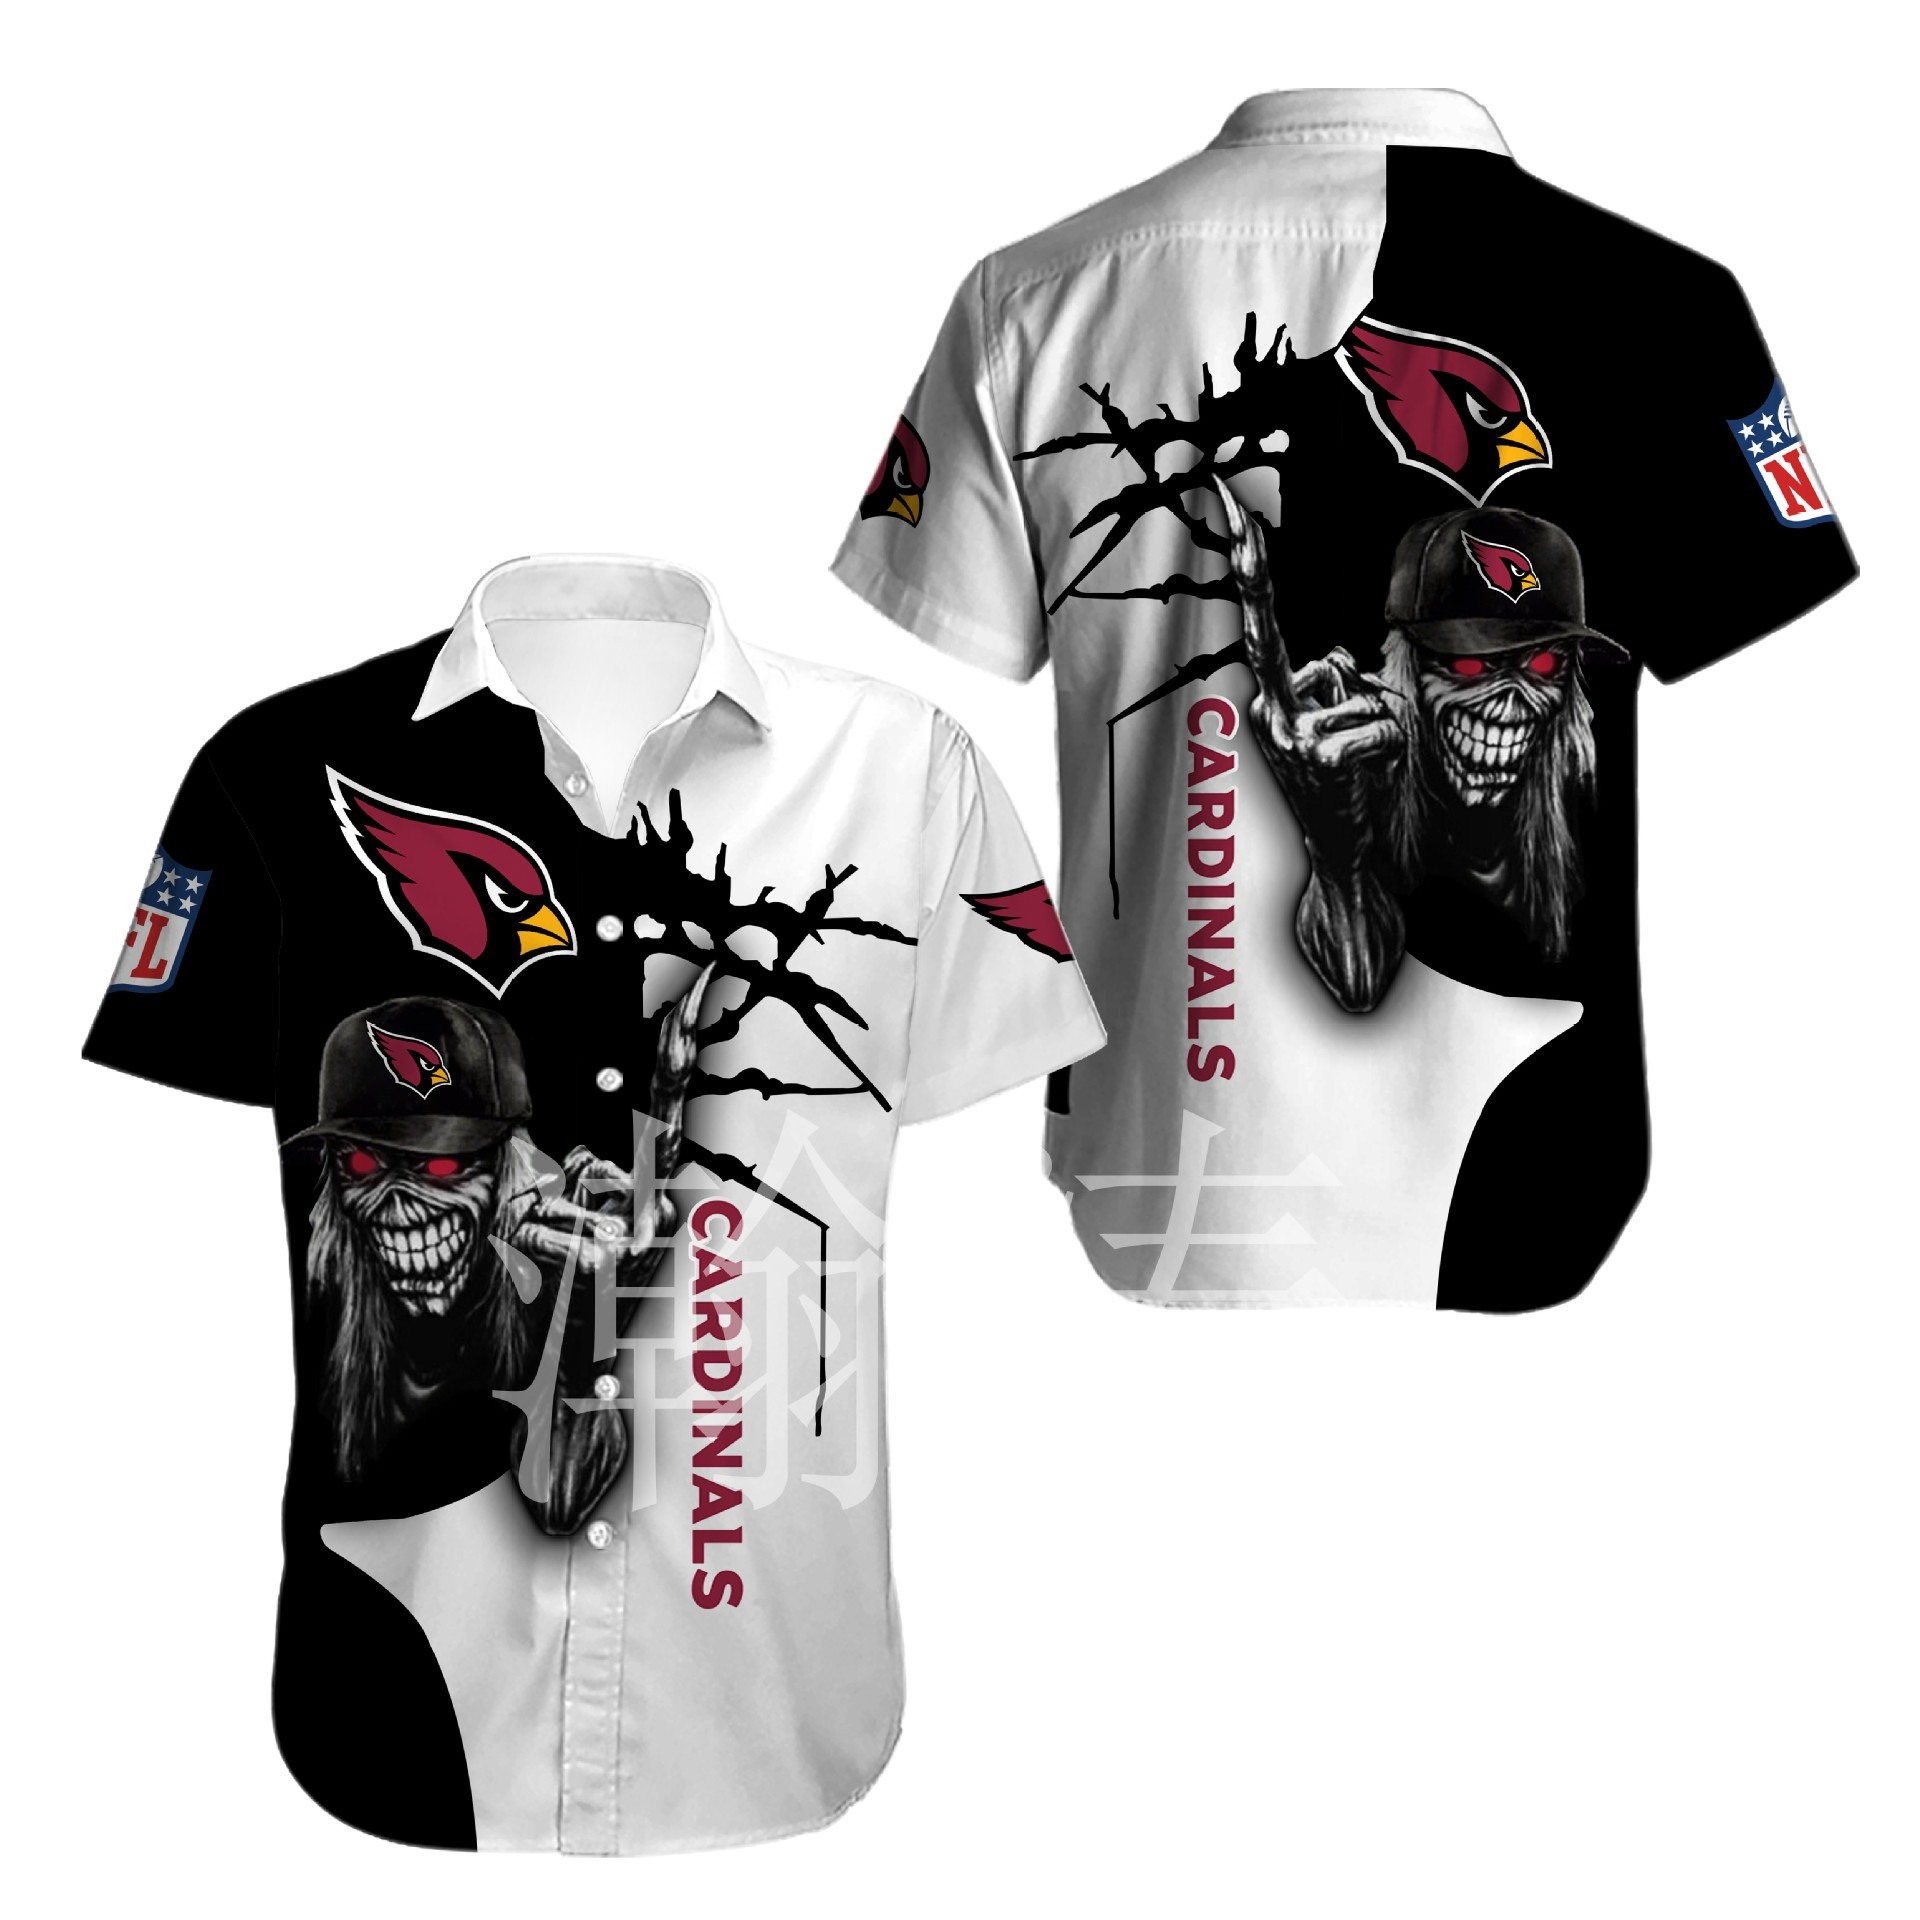 Arizona Cardinals button-up shirt 3D Iron Maiden gift for Halloween